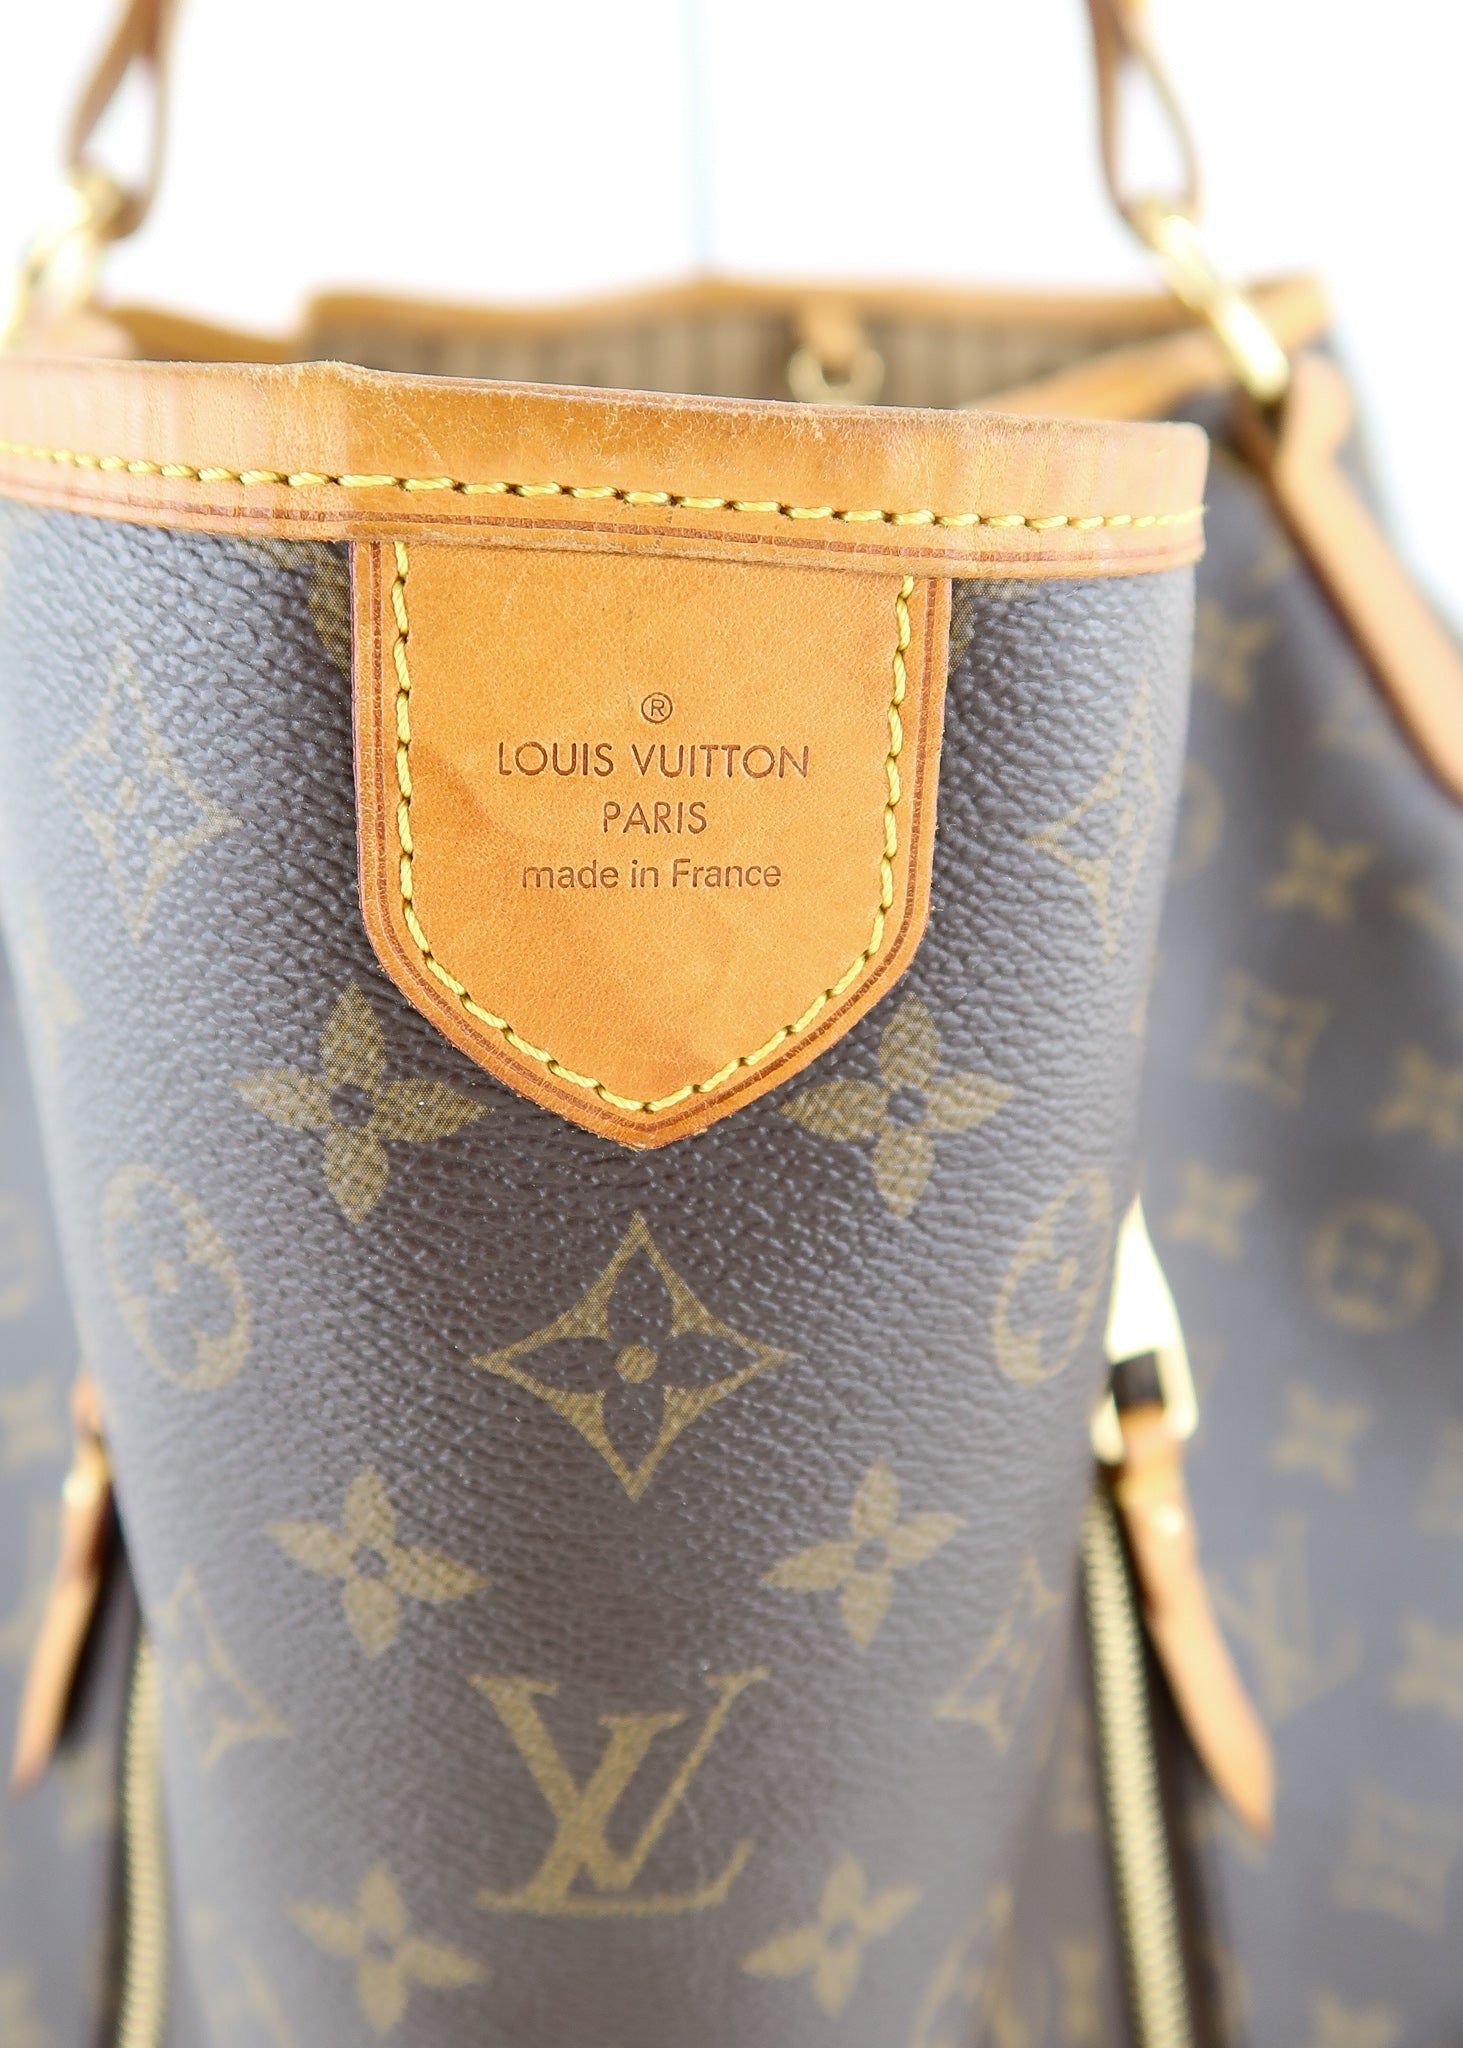 Louis Vuitton Delightful Gm Retail Price Listing